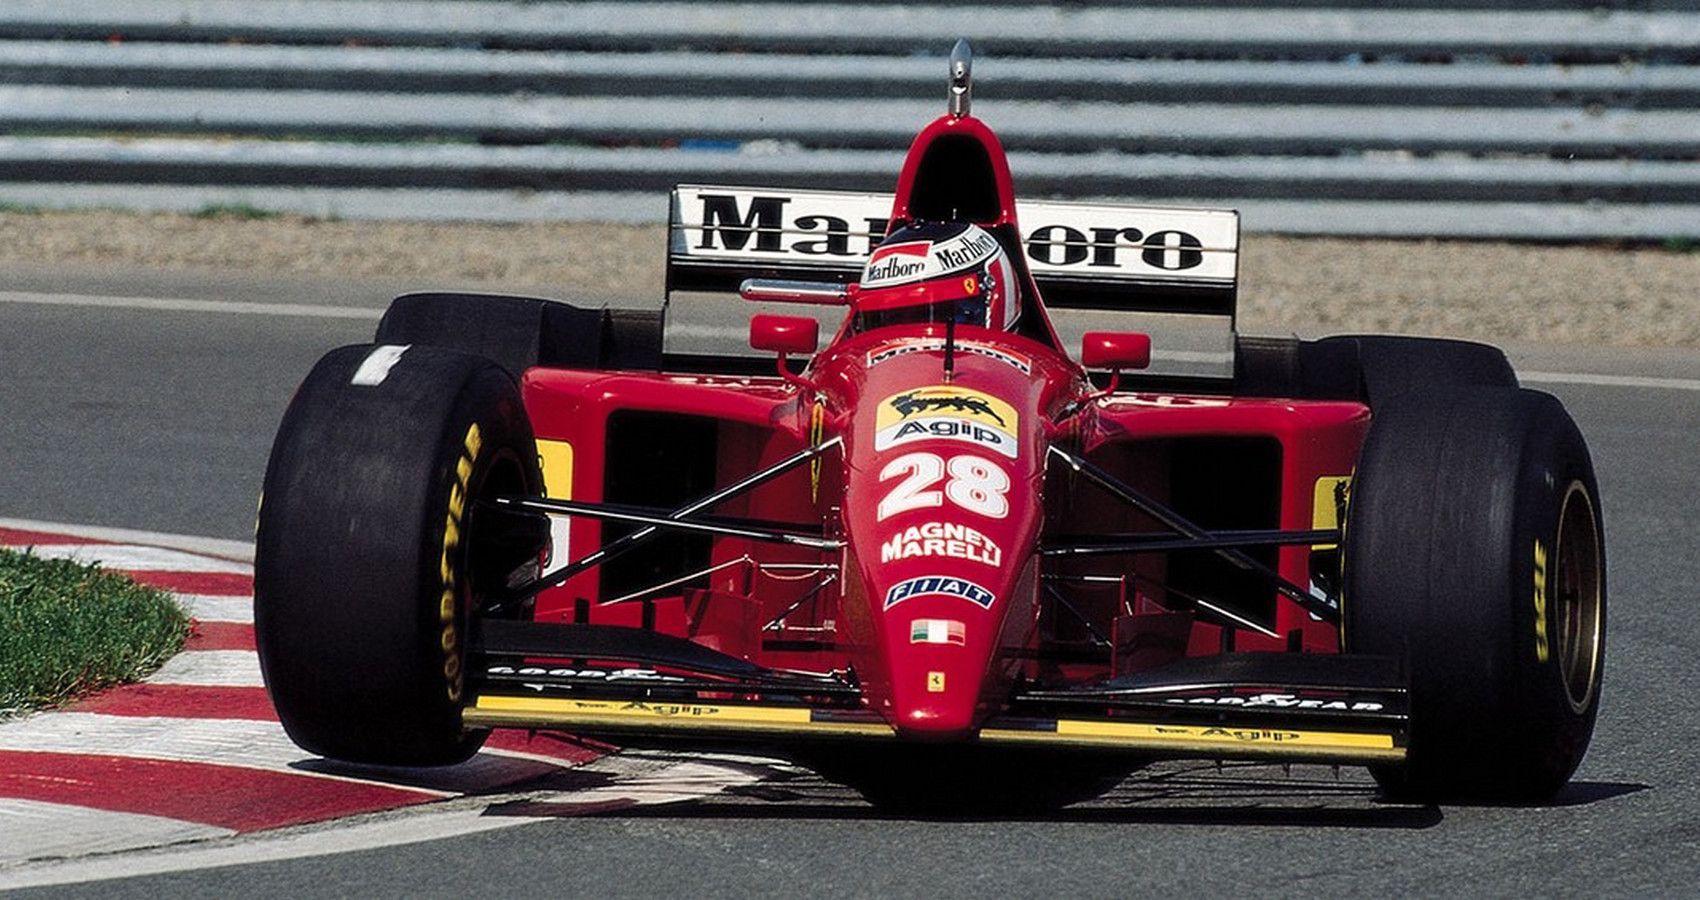 Ferrari F1 car - 1995